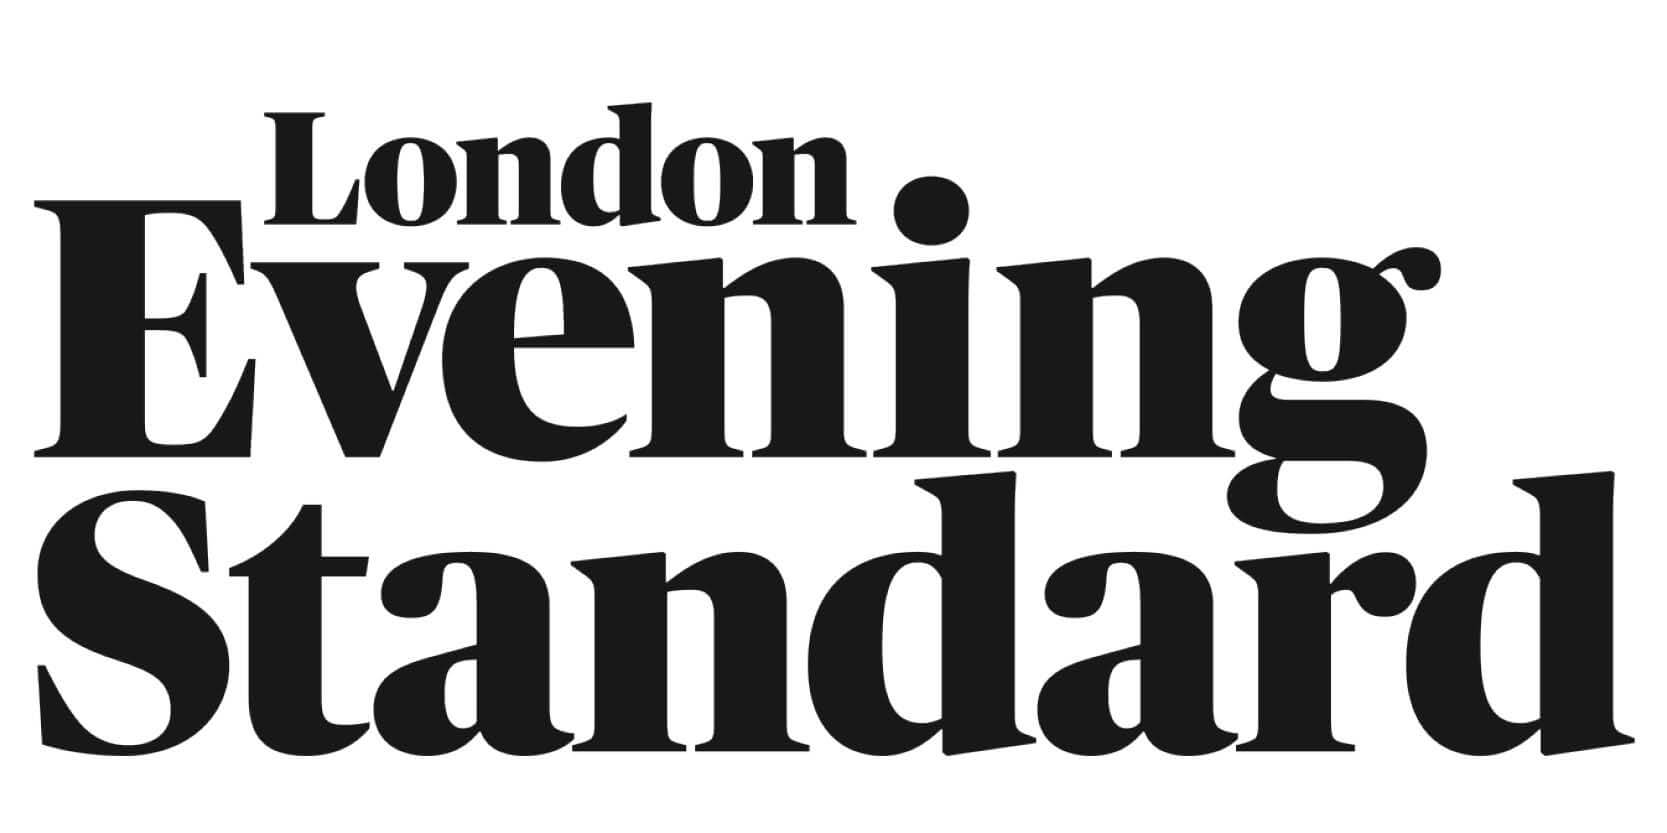 London Evening Standard Logo